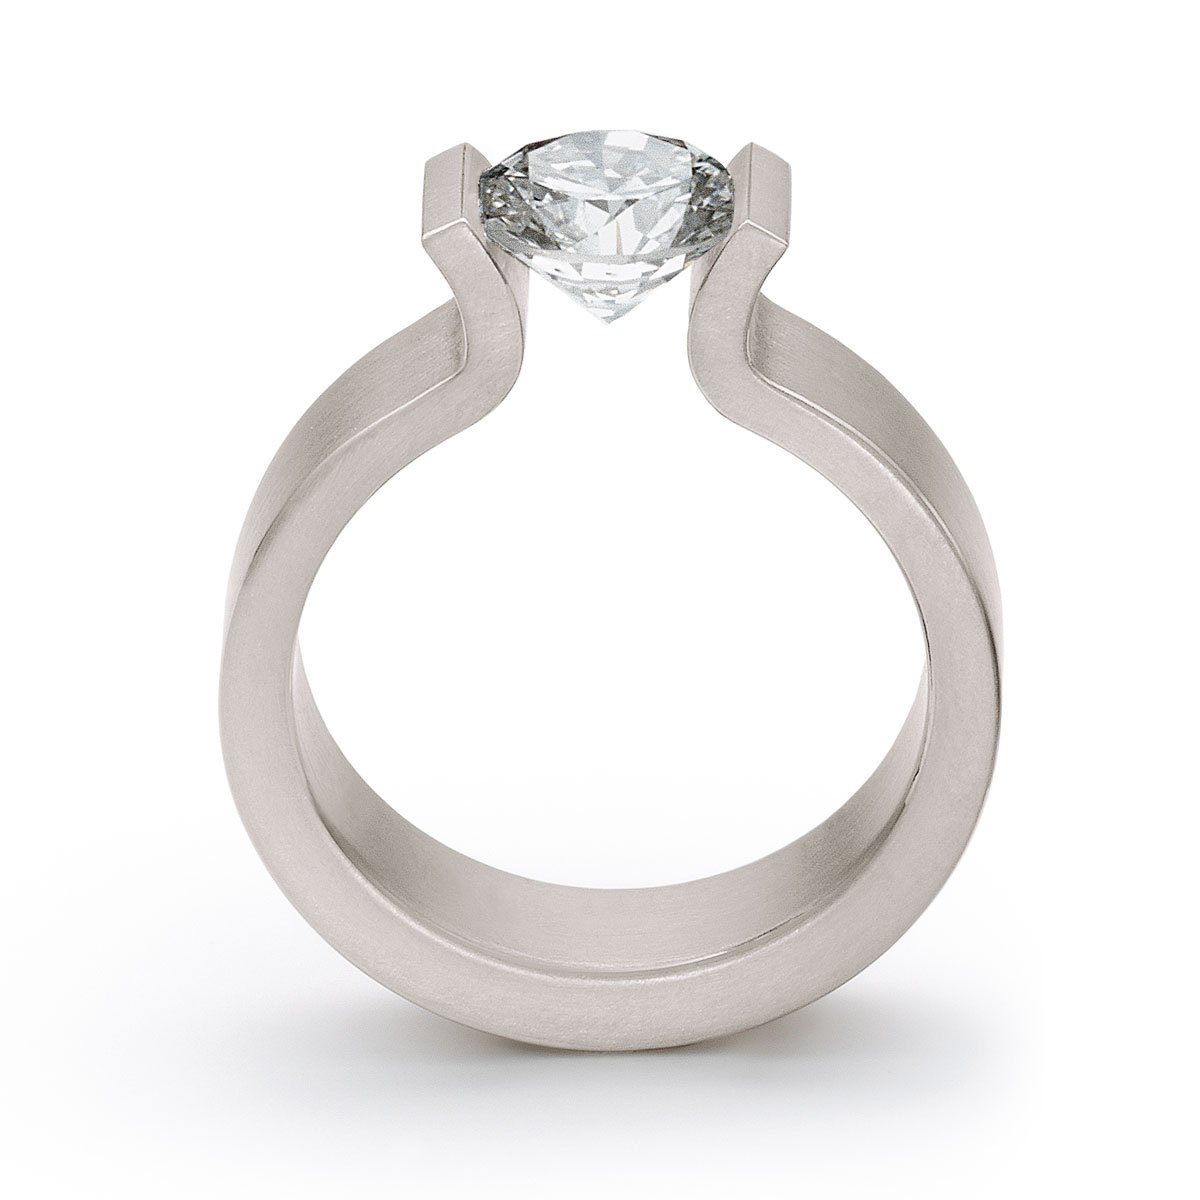 Openend by Niessing - Davidson JewelsNiessing Engagement Ring7Grey Gold18 Karat